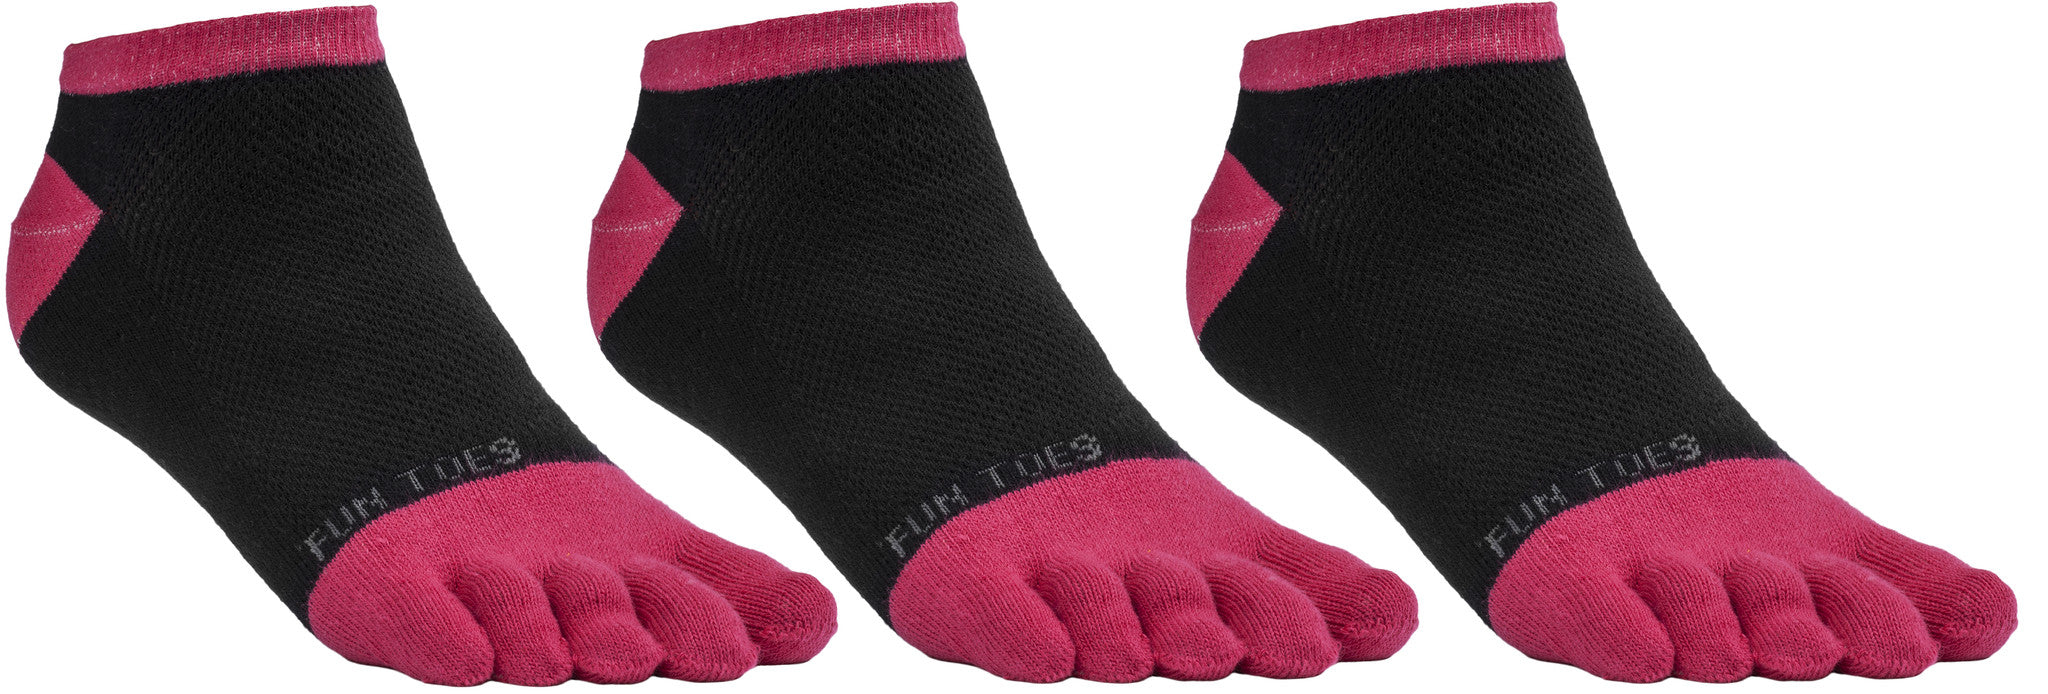 FUN TOES Women's Toe Socks Barefoot Running Socks Size 9-11 Shoe